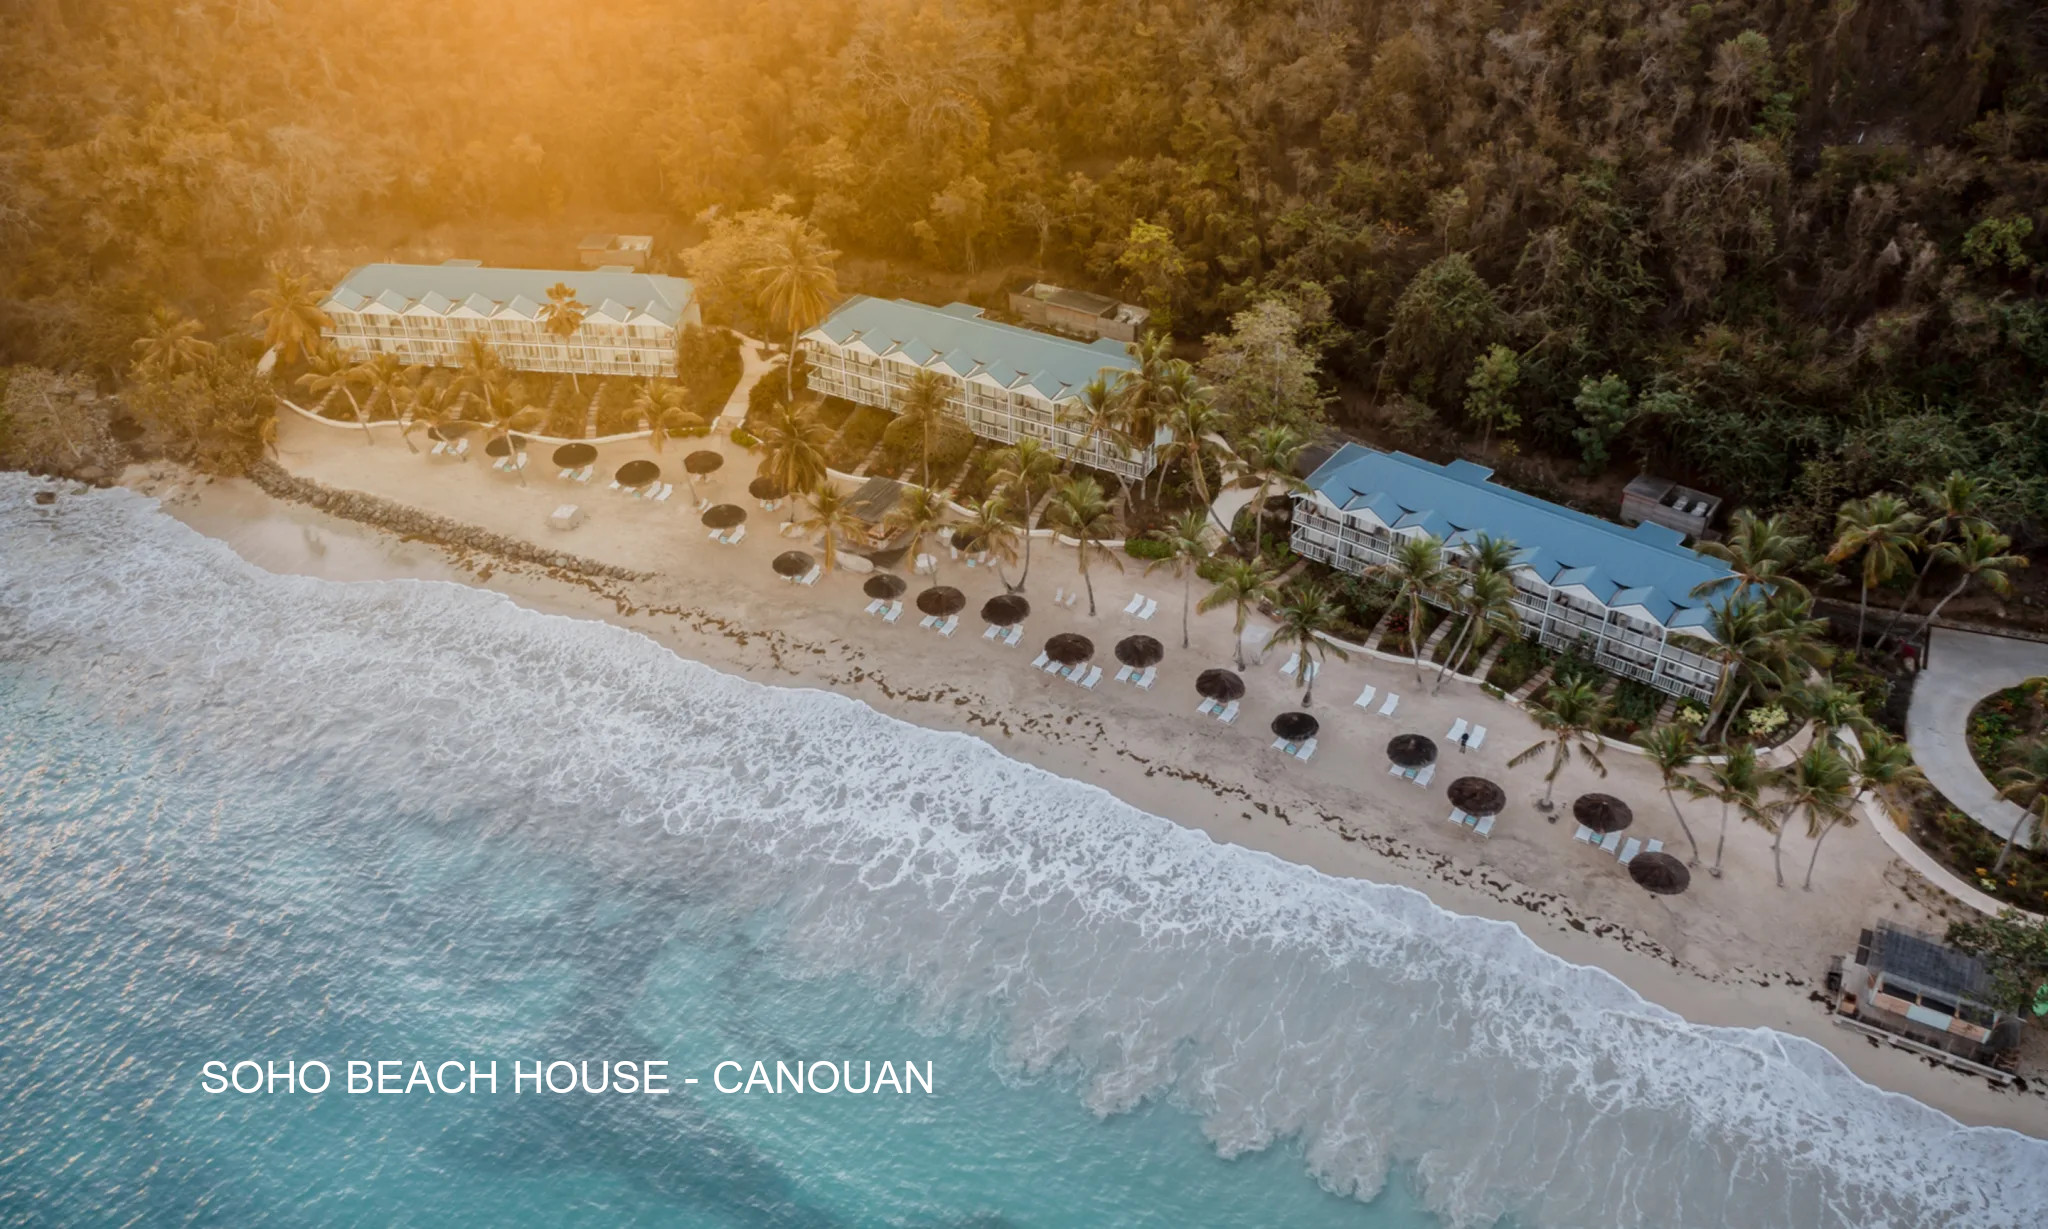 Soho Beach House - Canouan